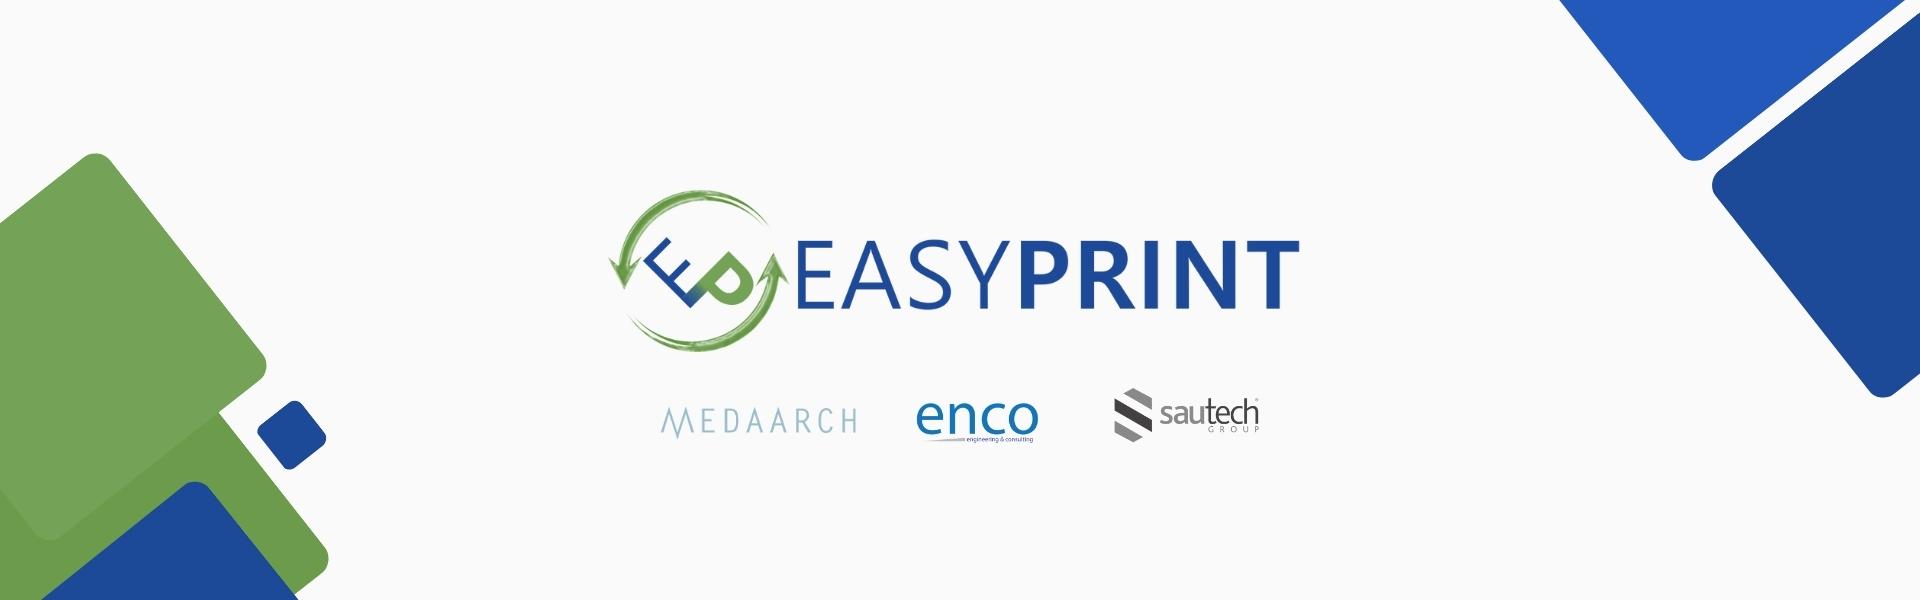 easyprint logo